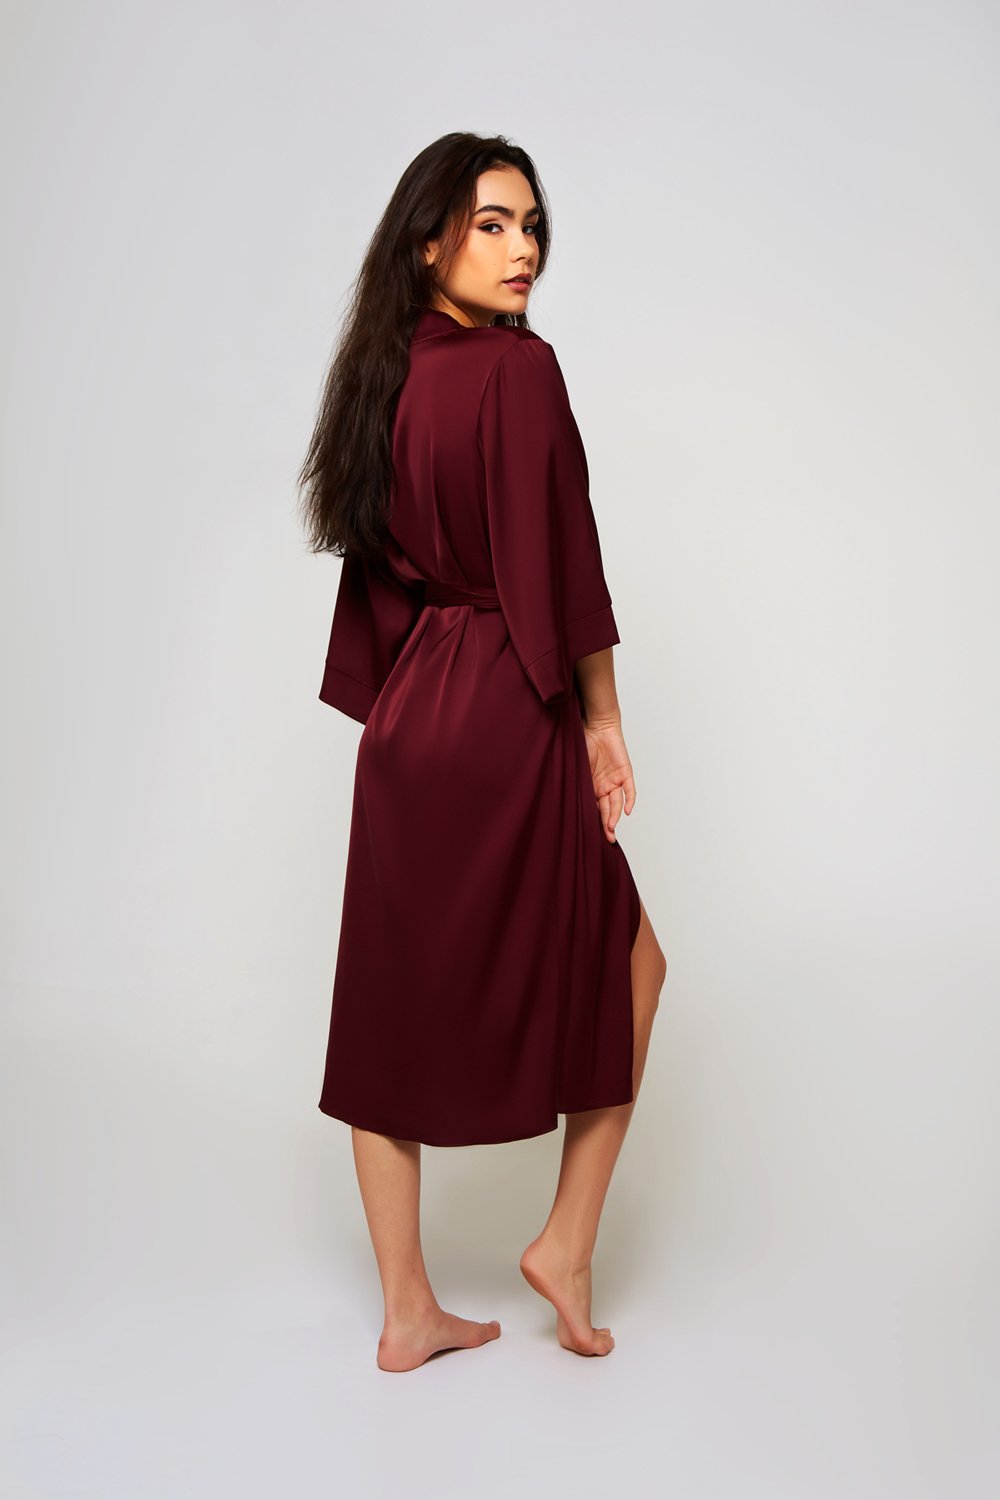 Tania Long Robe 78130 - Burgundy